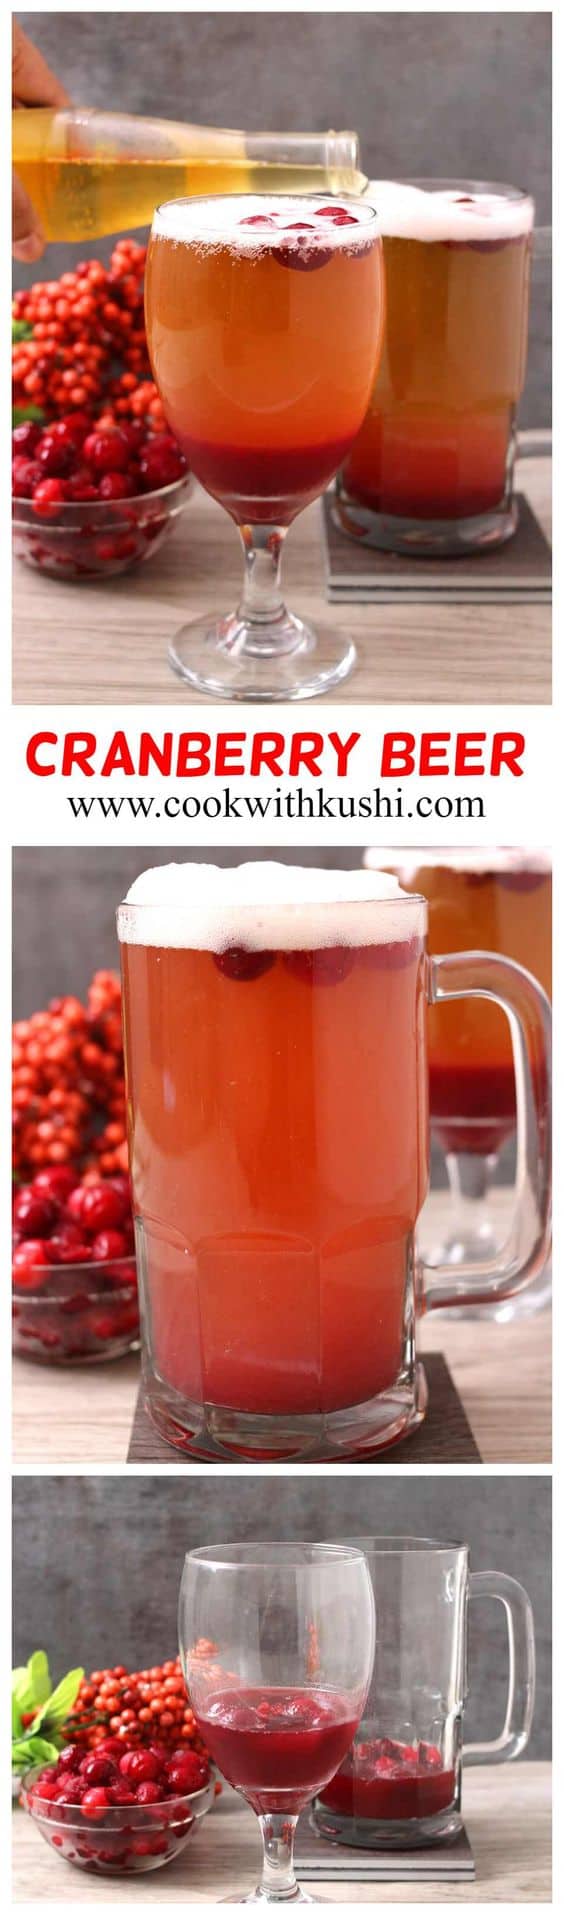 Cranberry beer in a beer mug.